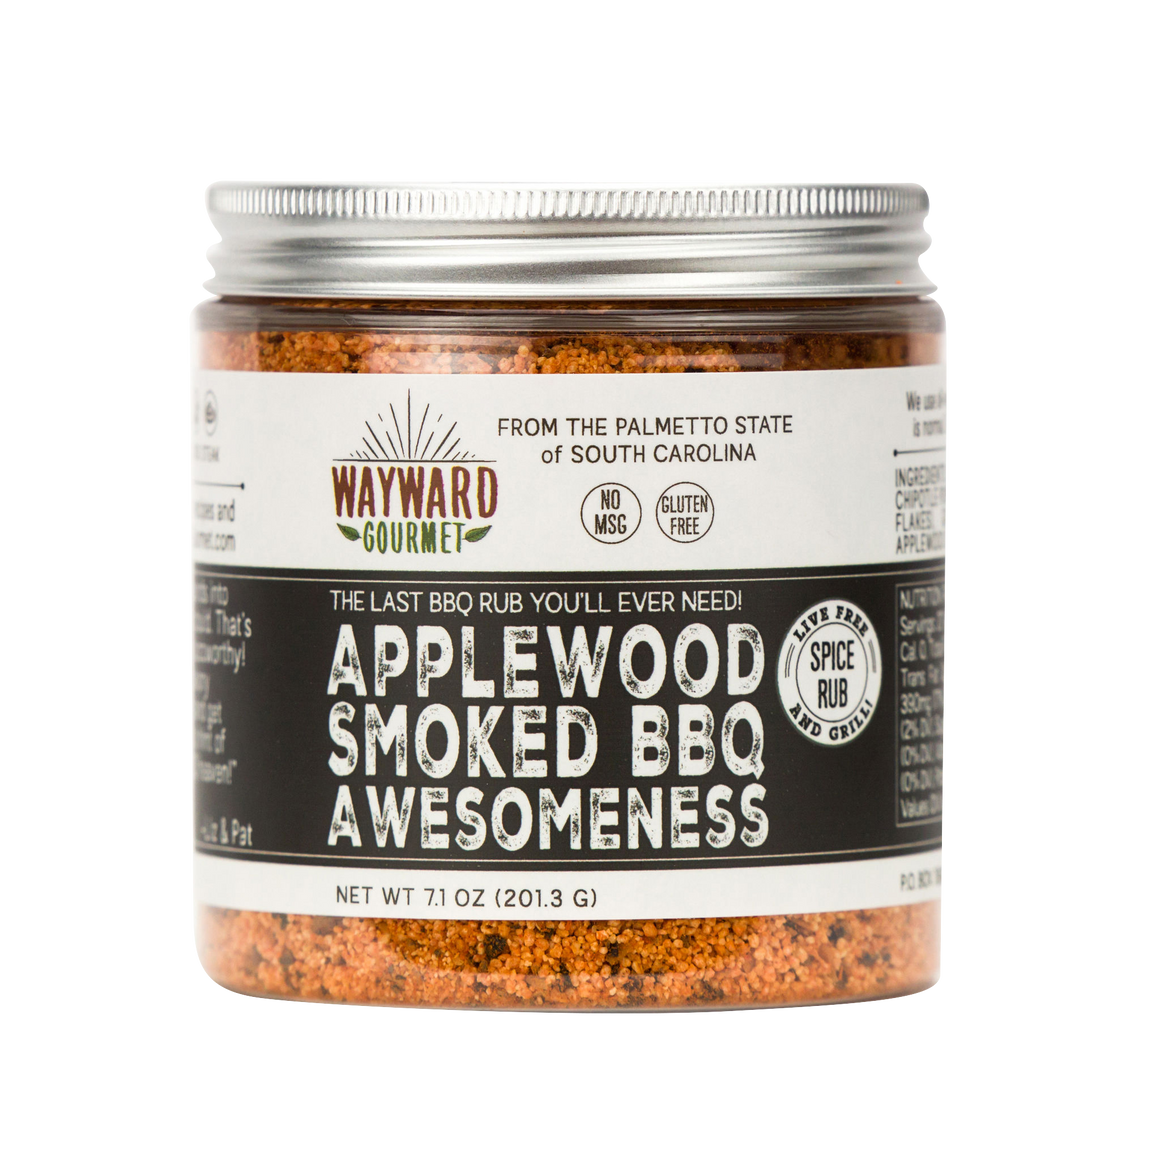 Applewood Smoked BBQ Awesomeness